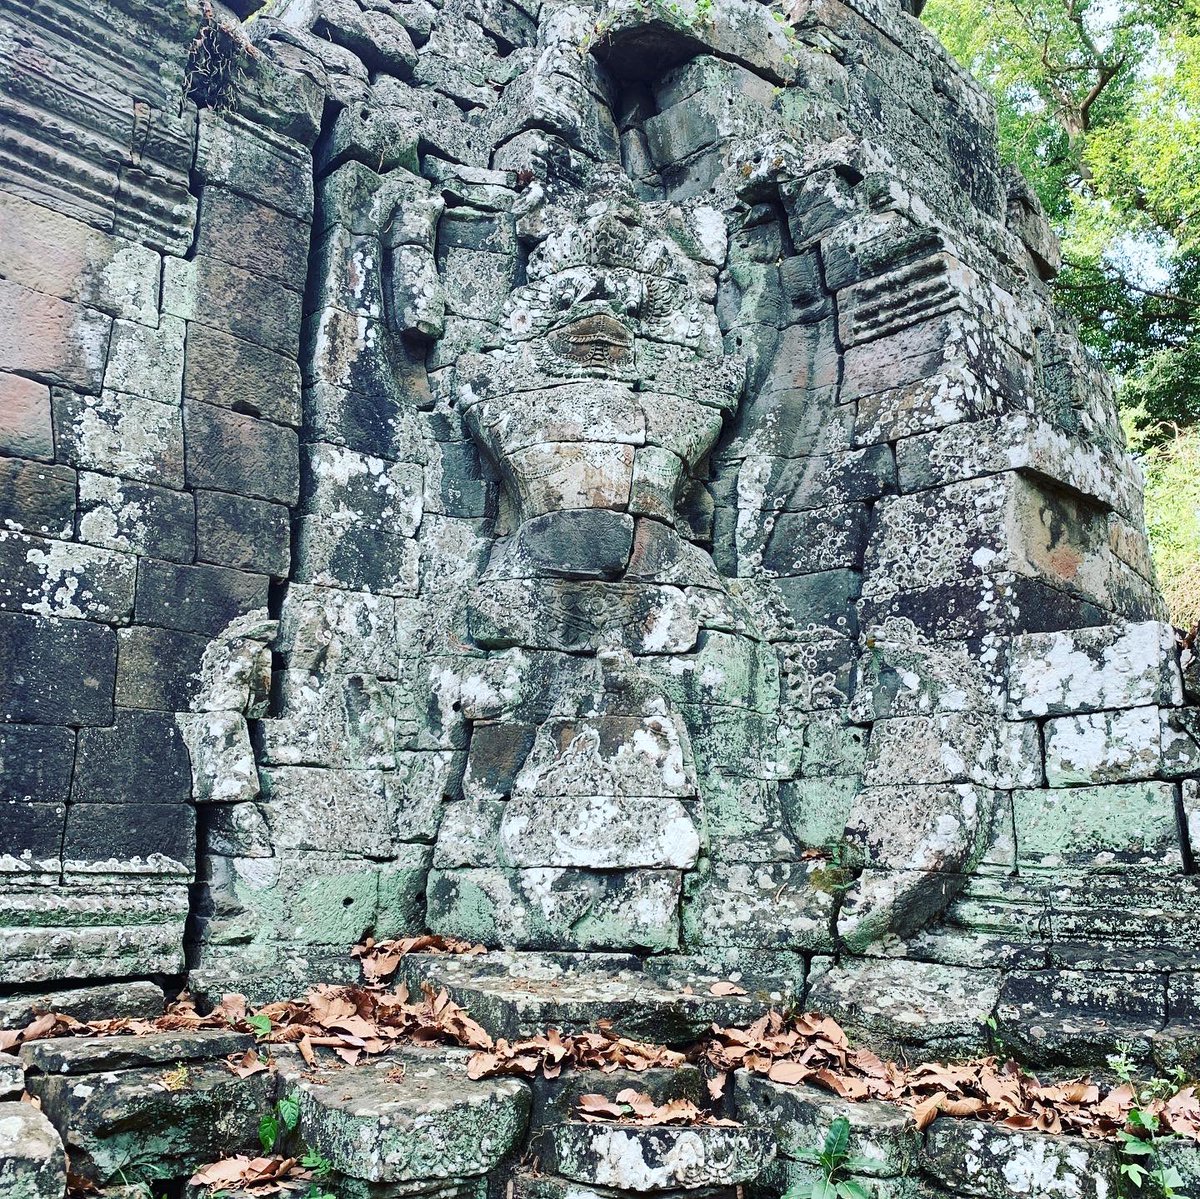 Banteay Kdei temple in Siem Reap. #VirtualTourswithSam #AmazingAngkor #sam_inspire #SamInspireAngkor #cambodia #siemreap #southeastasia #angkor #angkortemples #angkorwat #templesduringCovid19  #templesofcambodia #sam_family #tourswithSam #eventwithSam #teambuildingwithSam #Sam